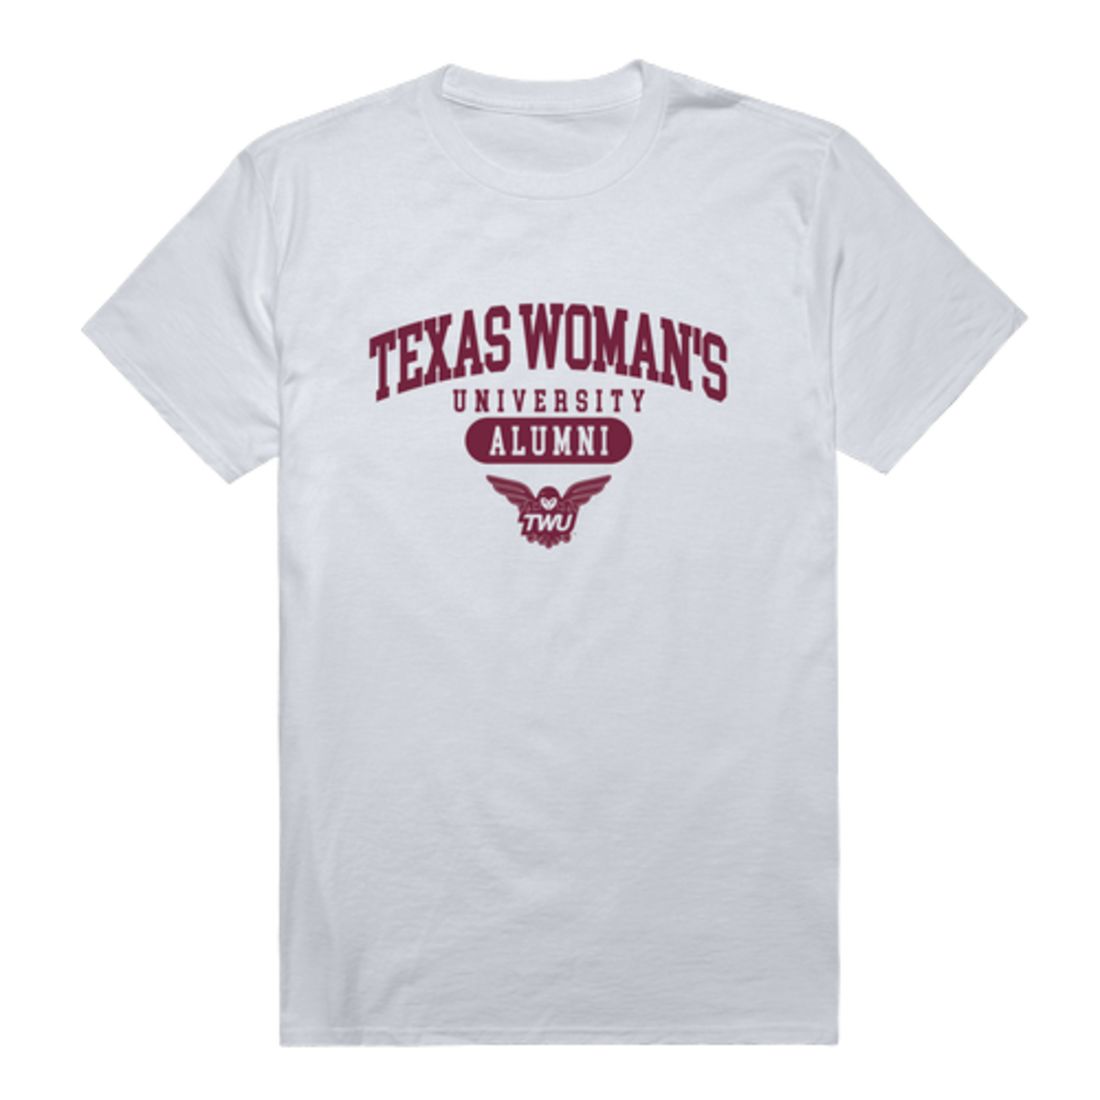 Texas Woman's University Pioneers Alumni T-Shirts